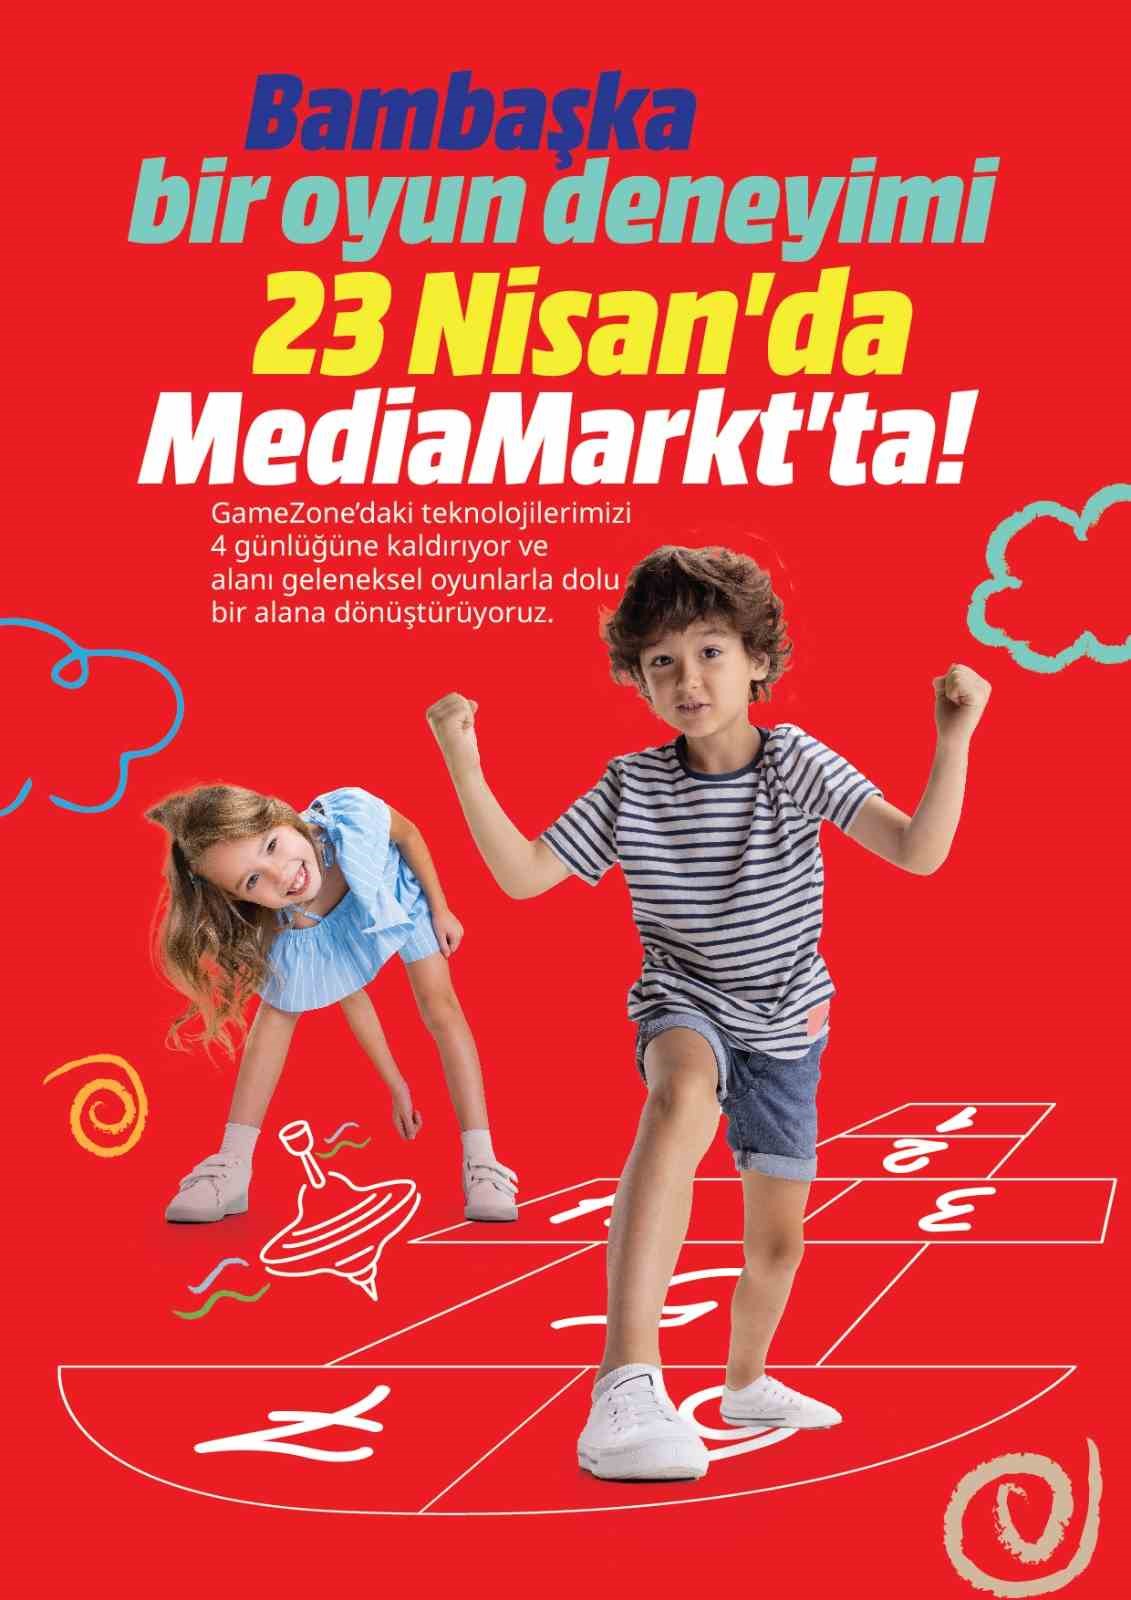 MediaMarkt 专为儿童打造的游戏体验区